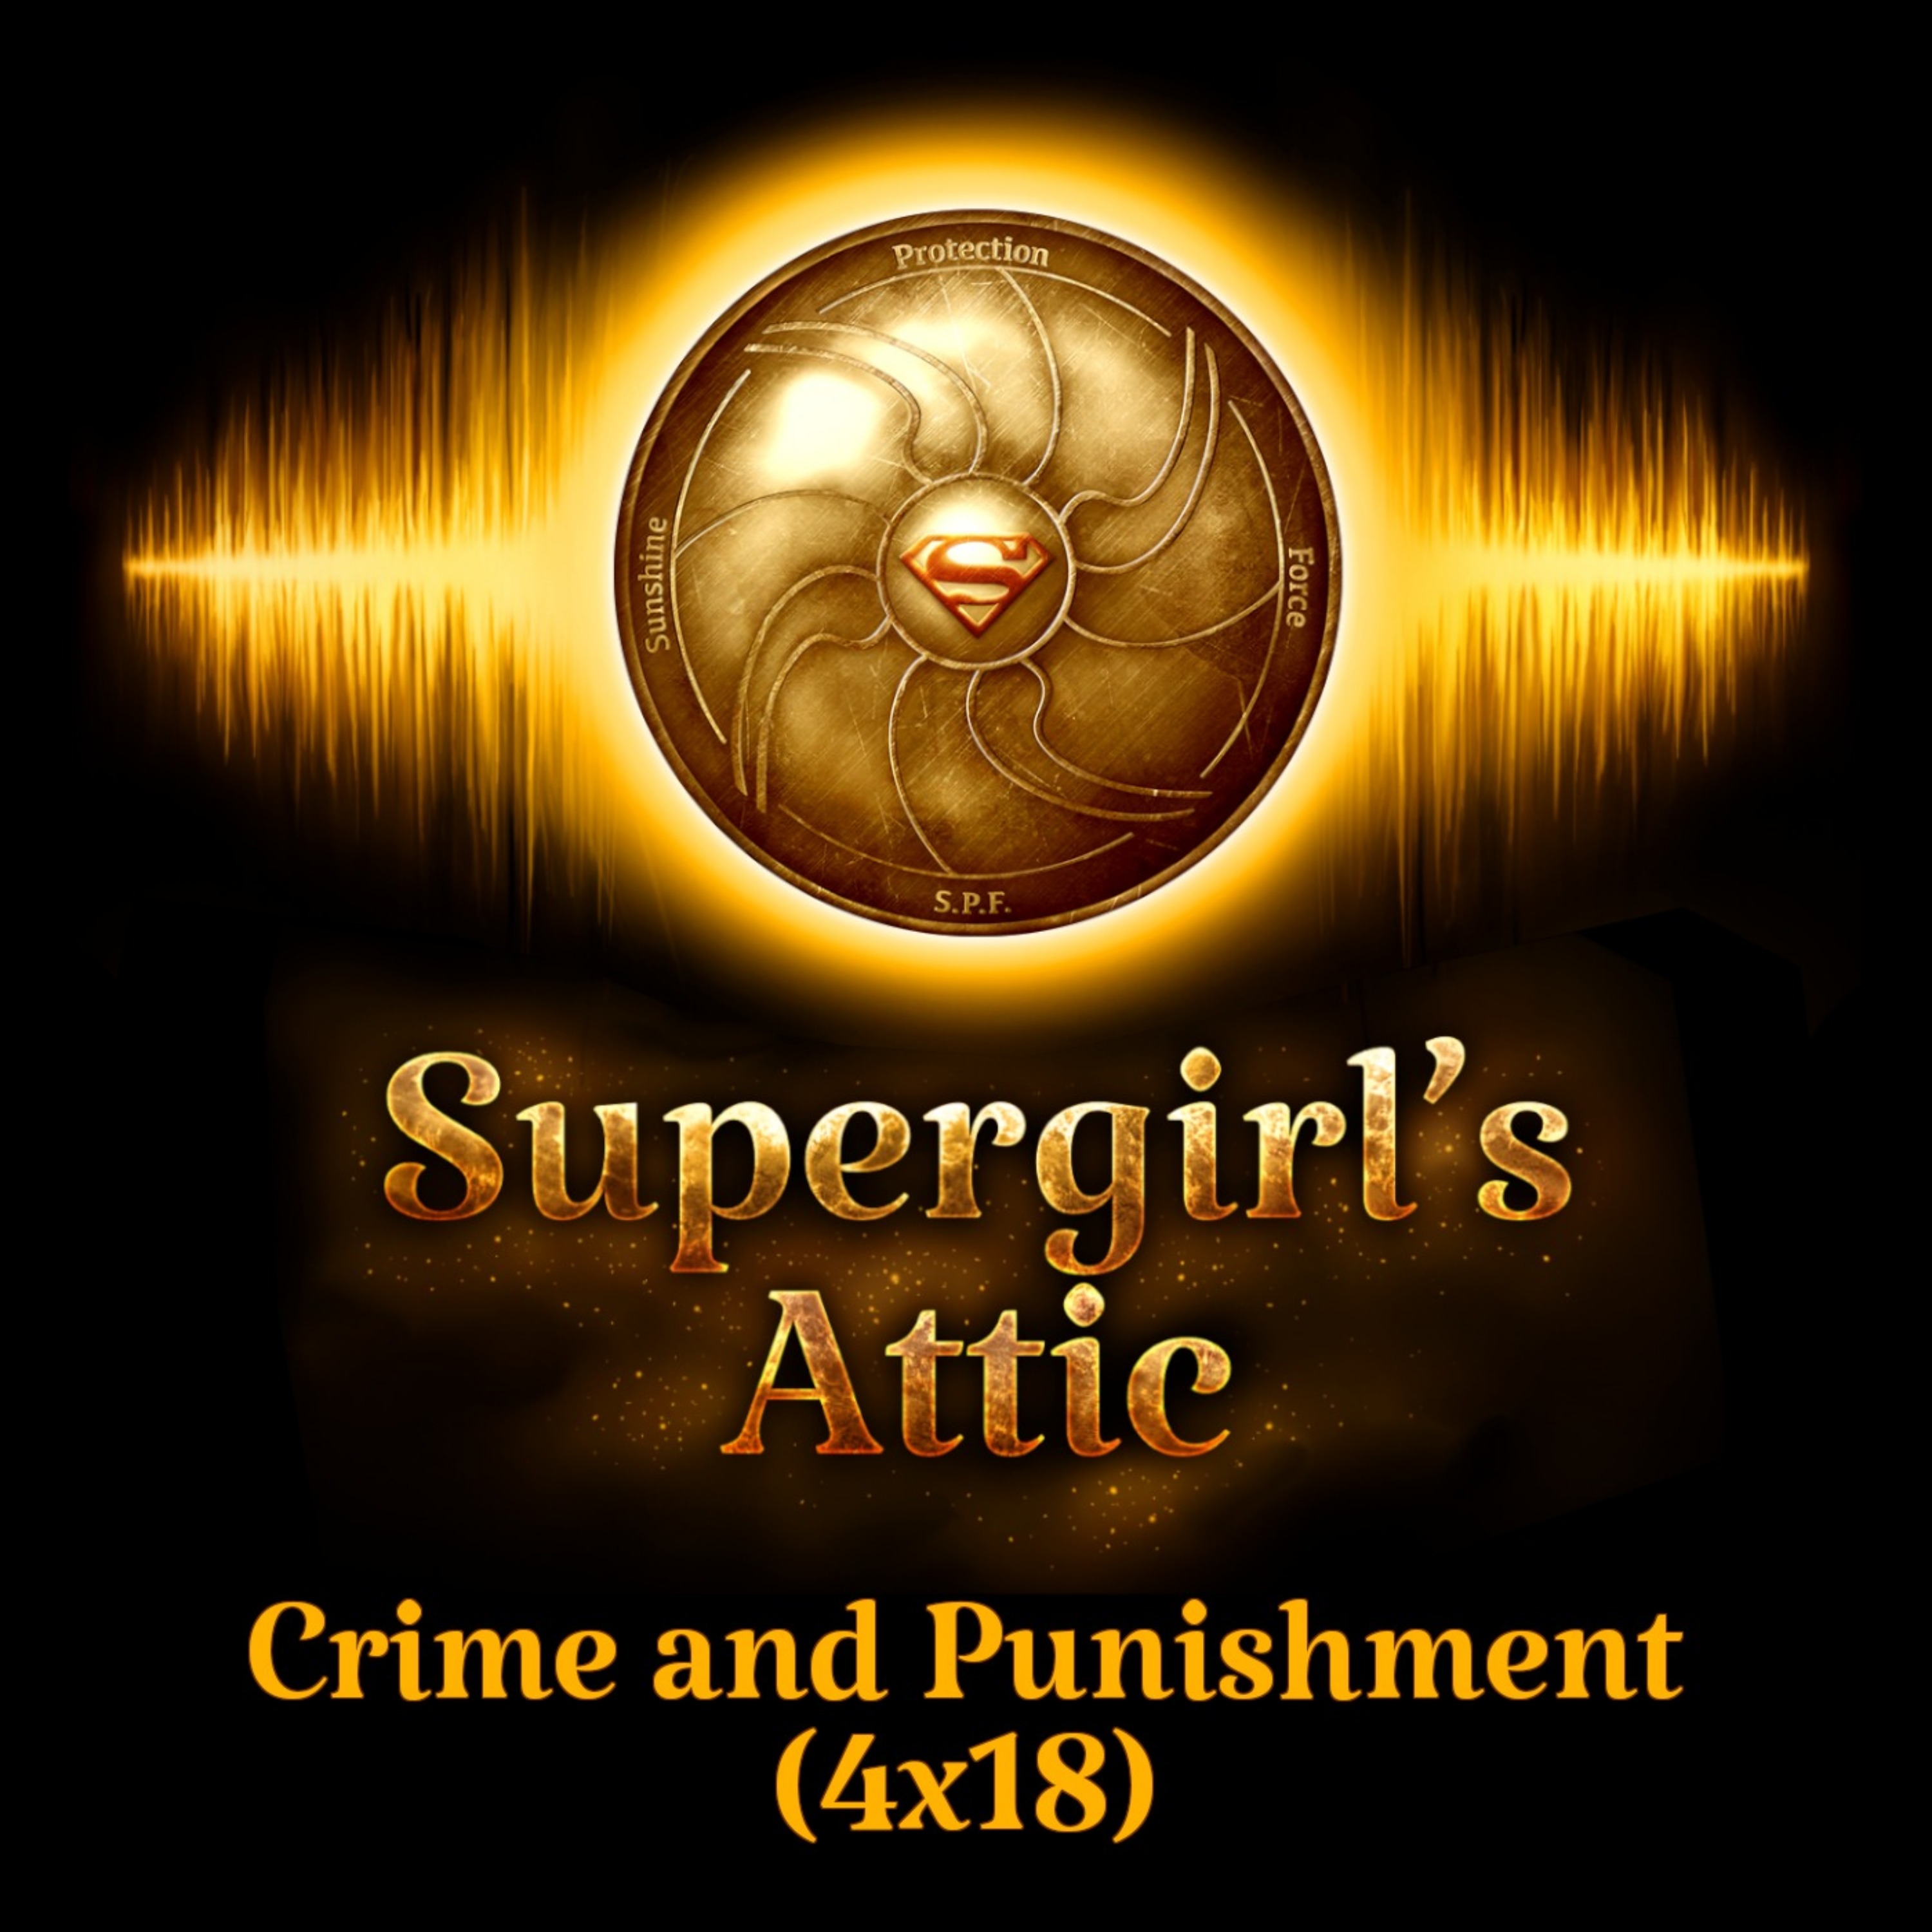 Crime and Punishment (4x18)